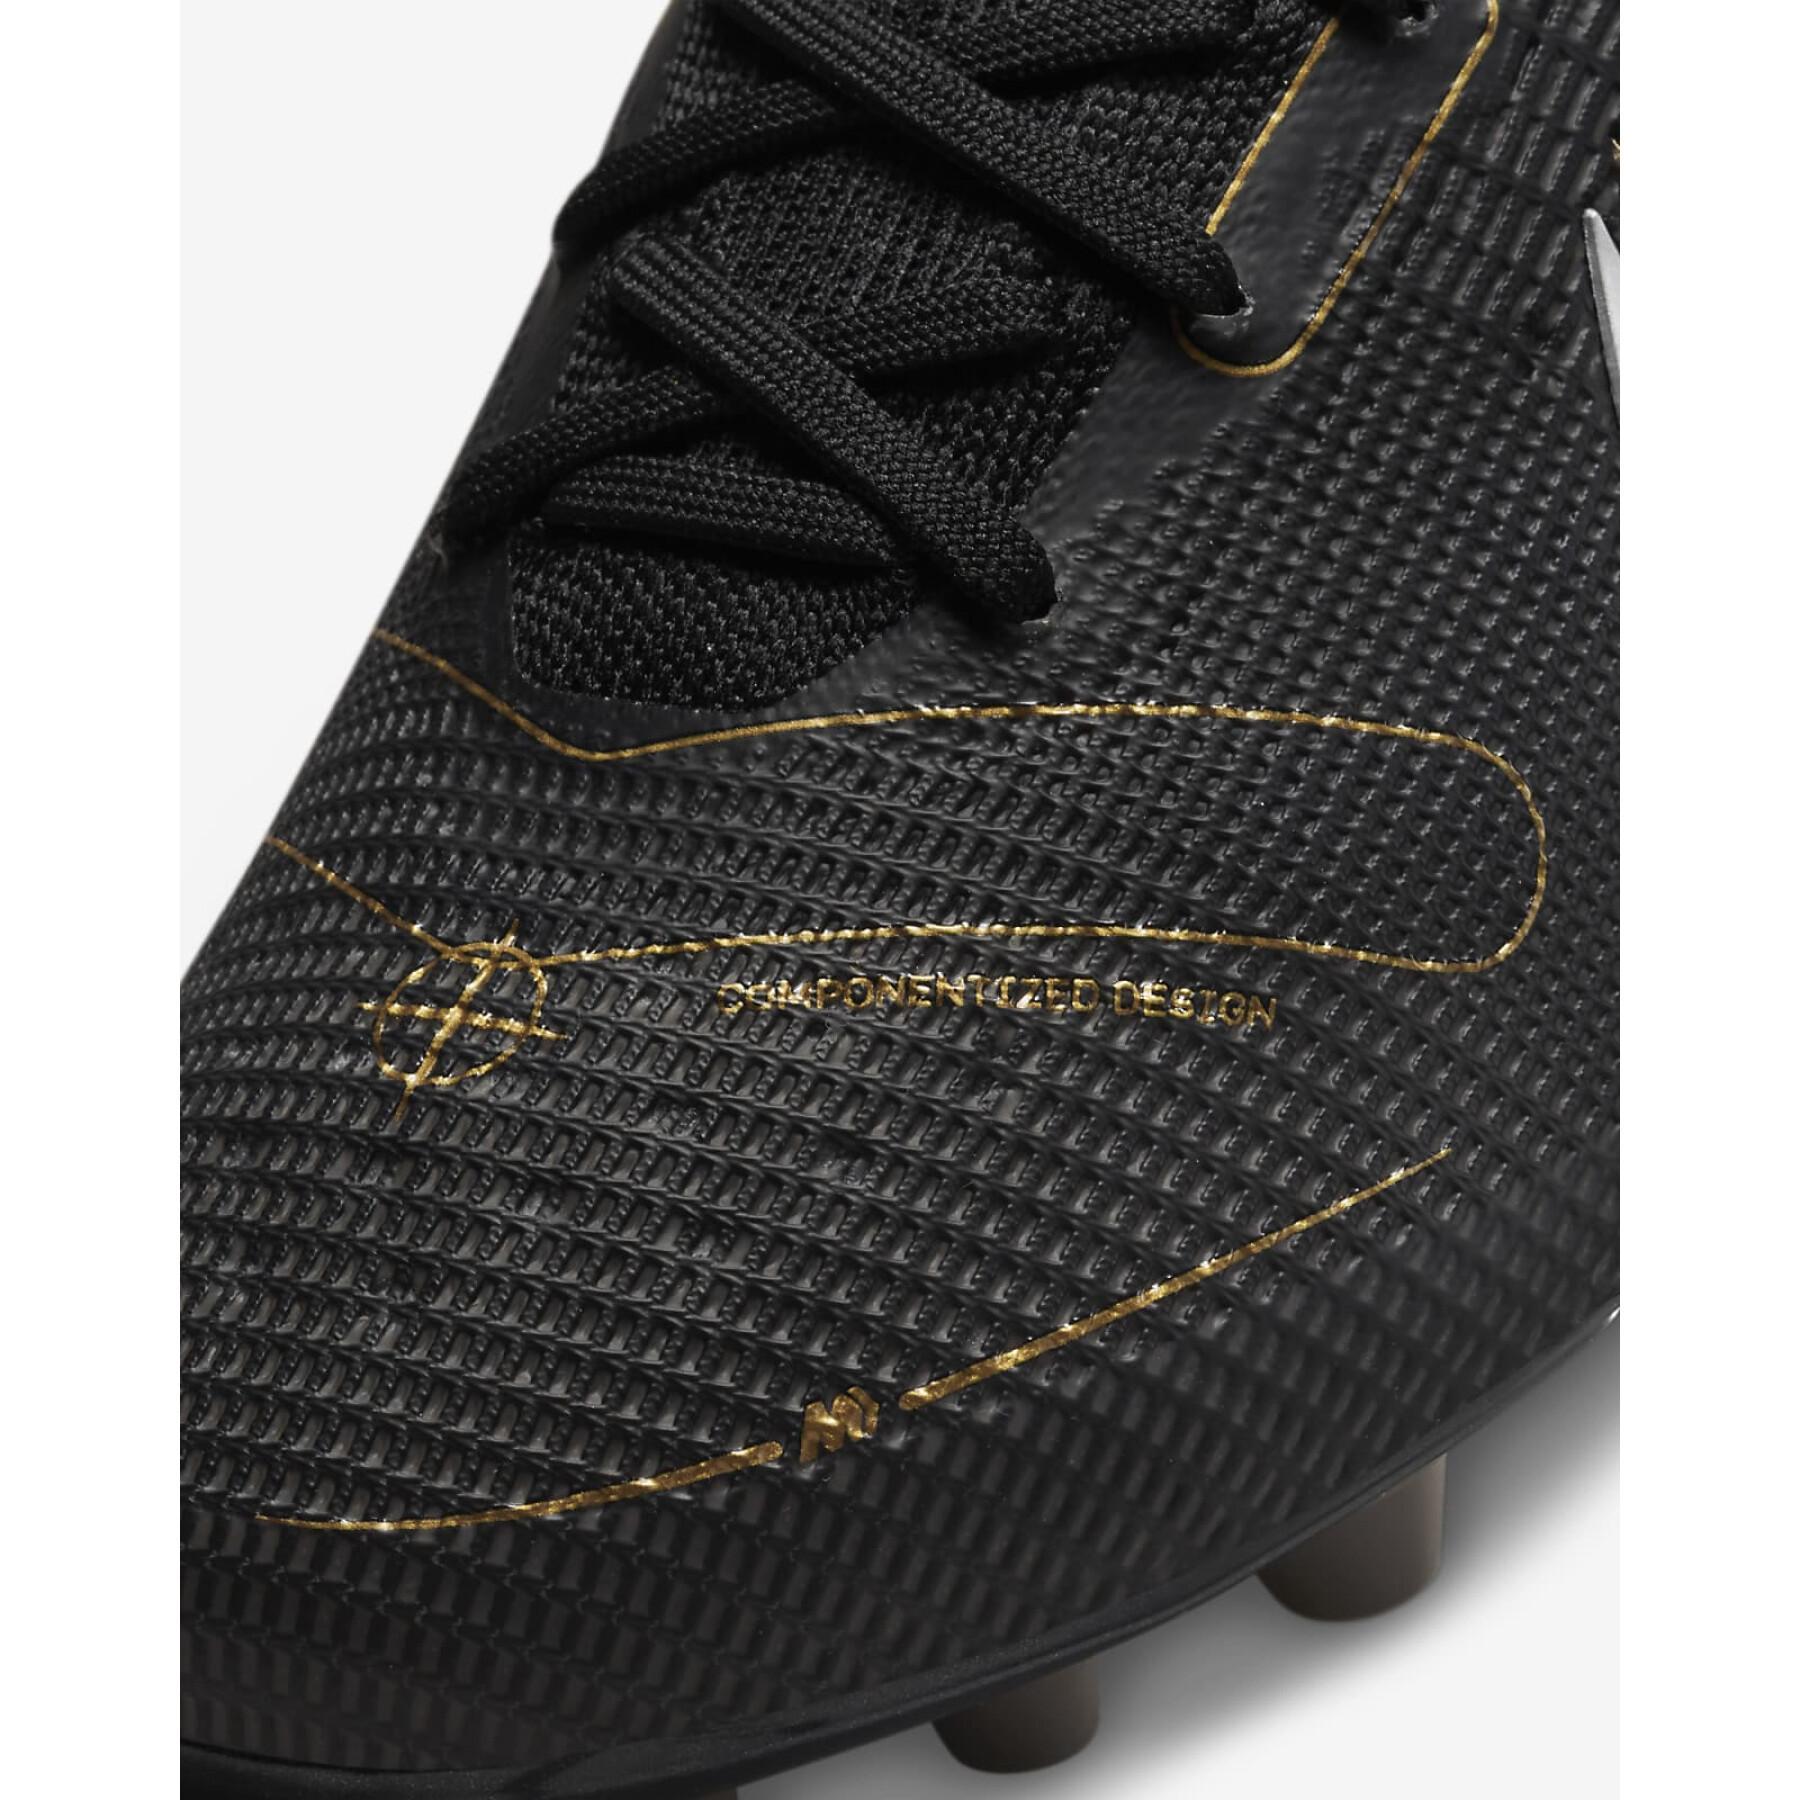 Botas de fútbol Nike Vapor 14 Élite AG - Shadow pack